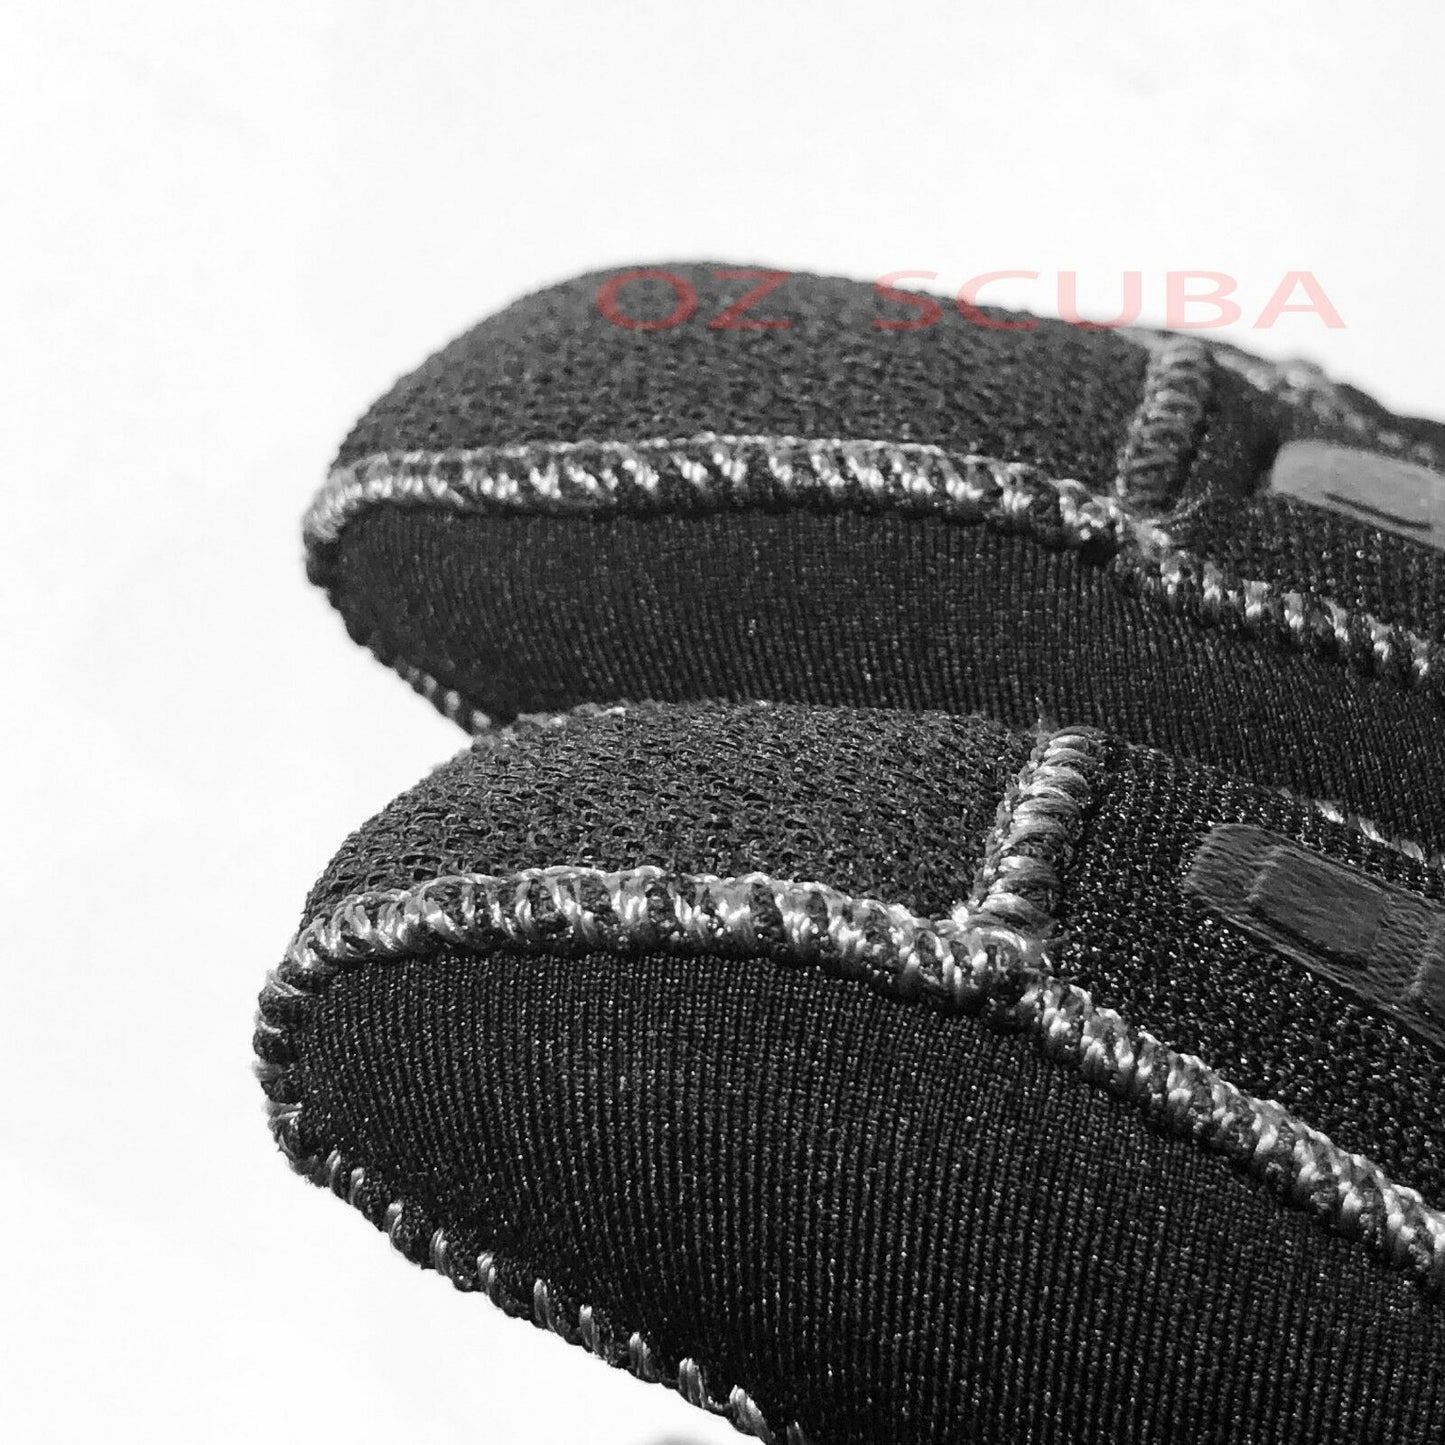 Scubapro Gloves G-Flex 5mm